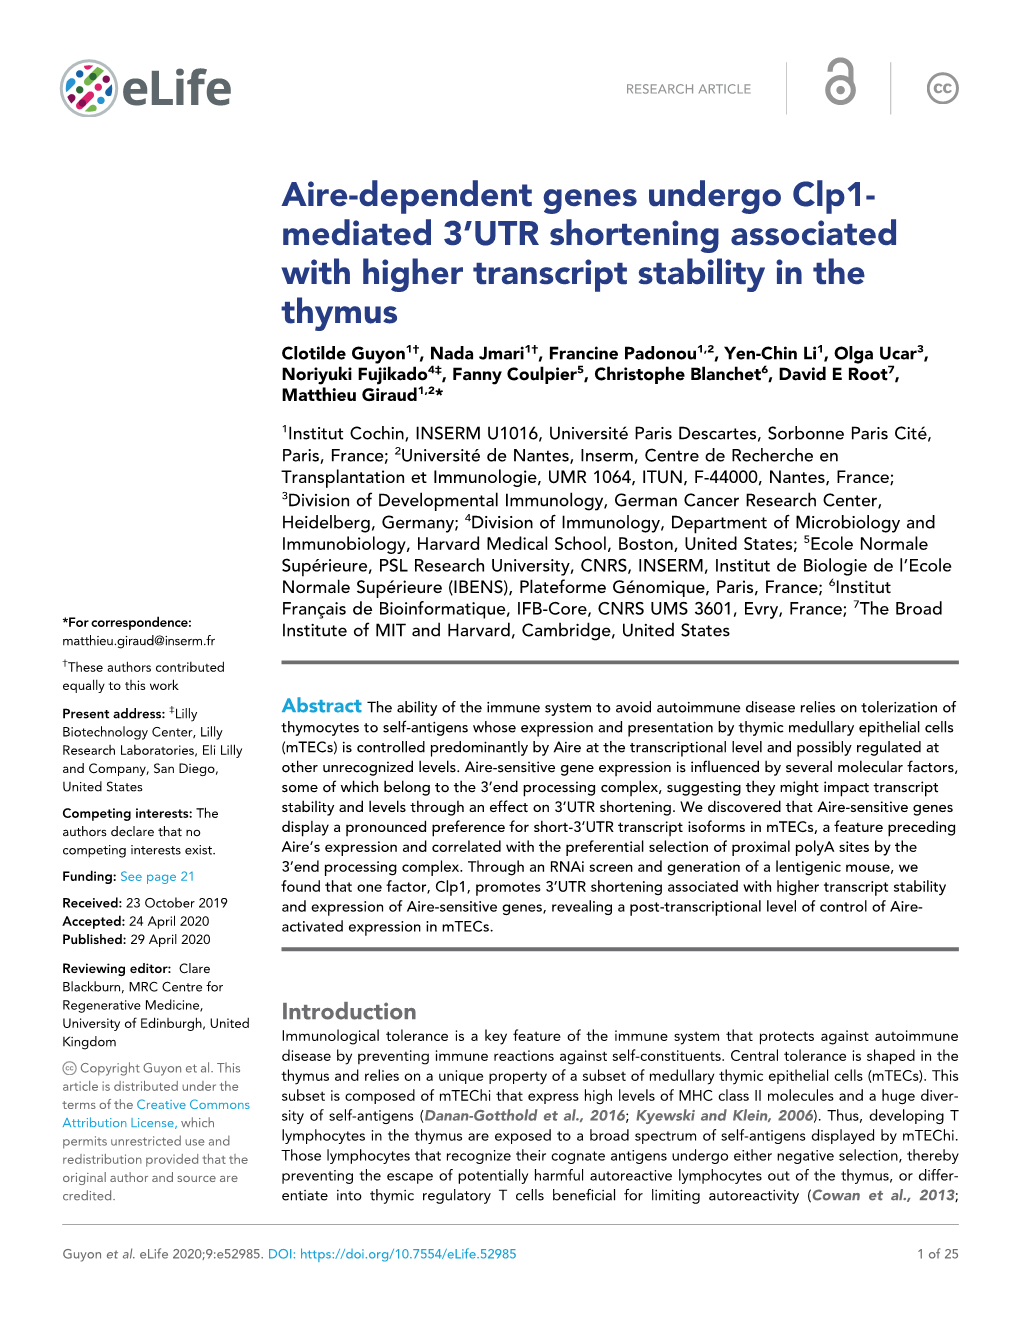 Aire-Dependent Genes Undergo Clp1